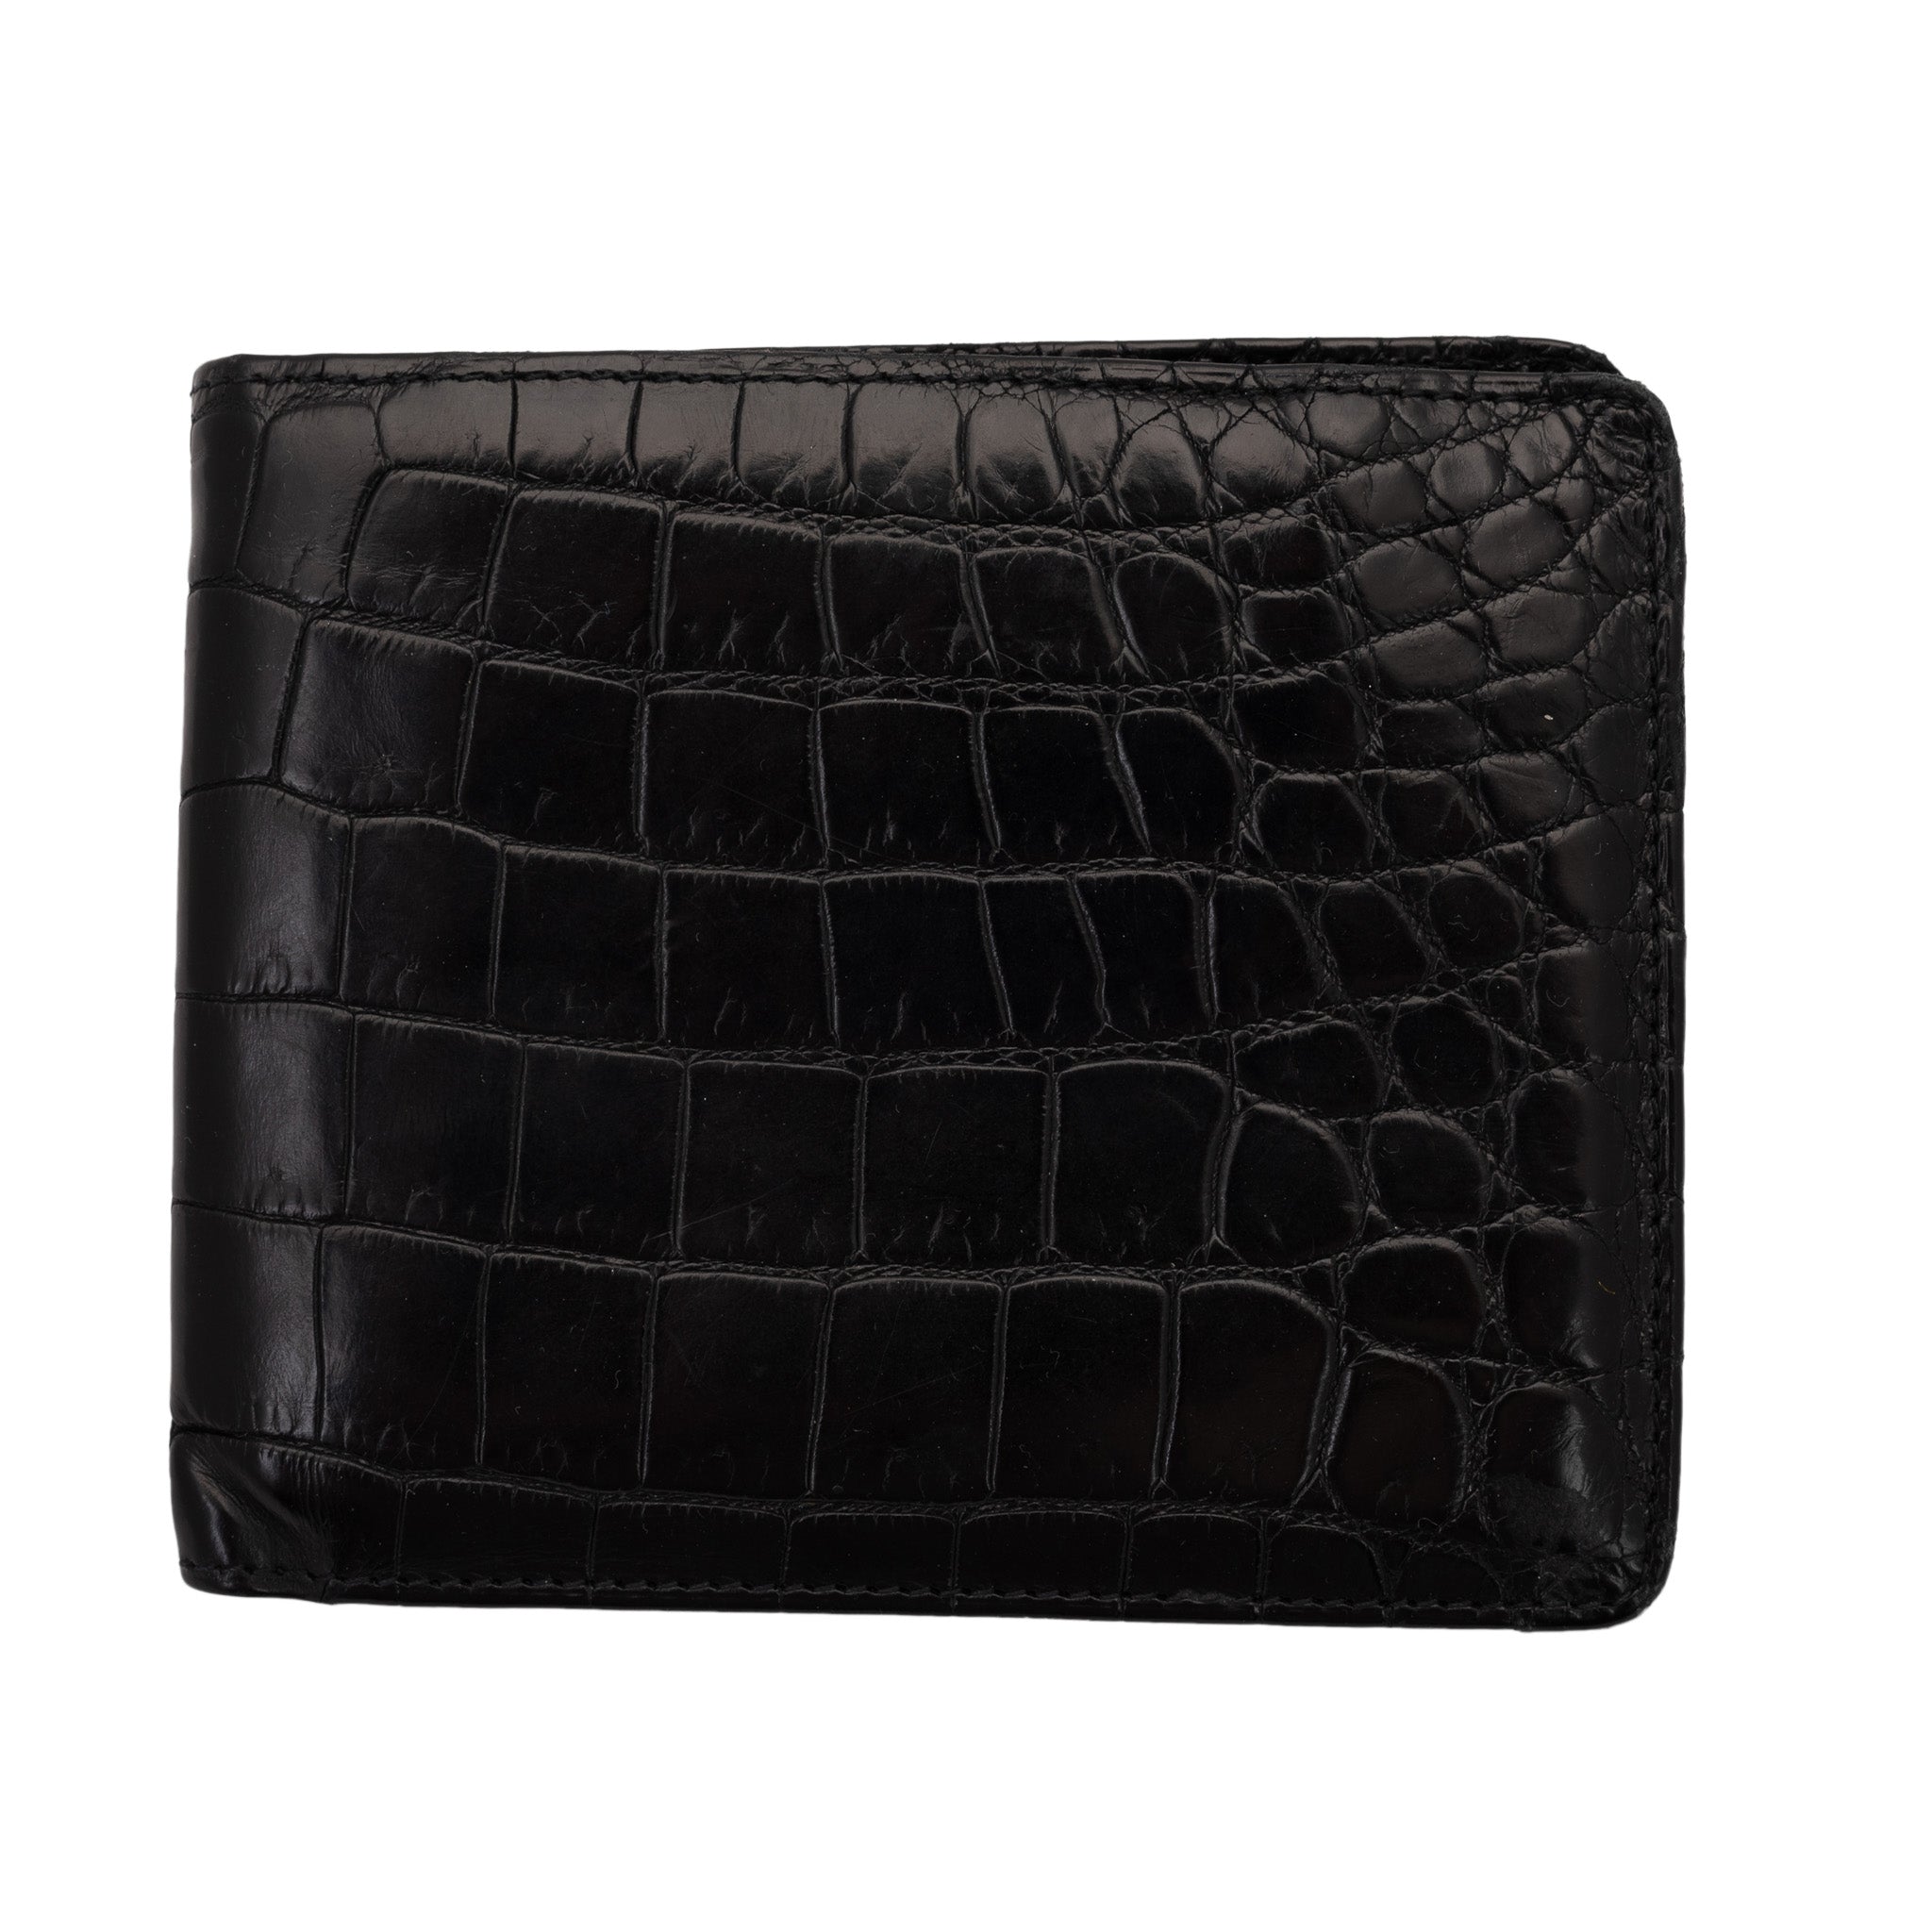 VIA LA MODA Black Crocodile Leather Card Holder Wallet